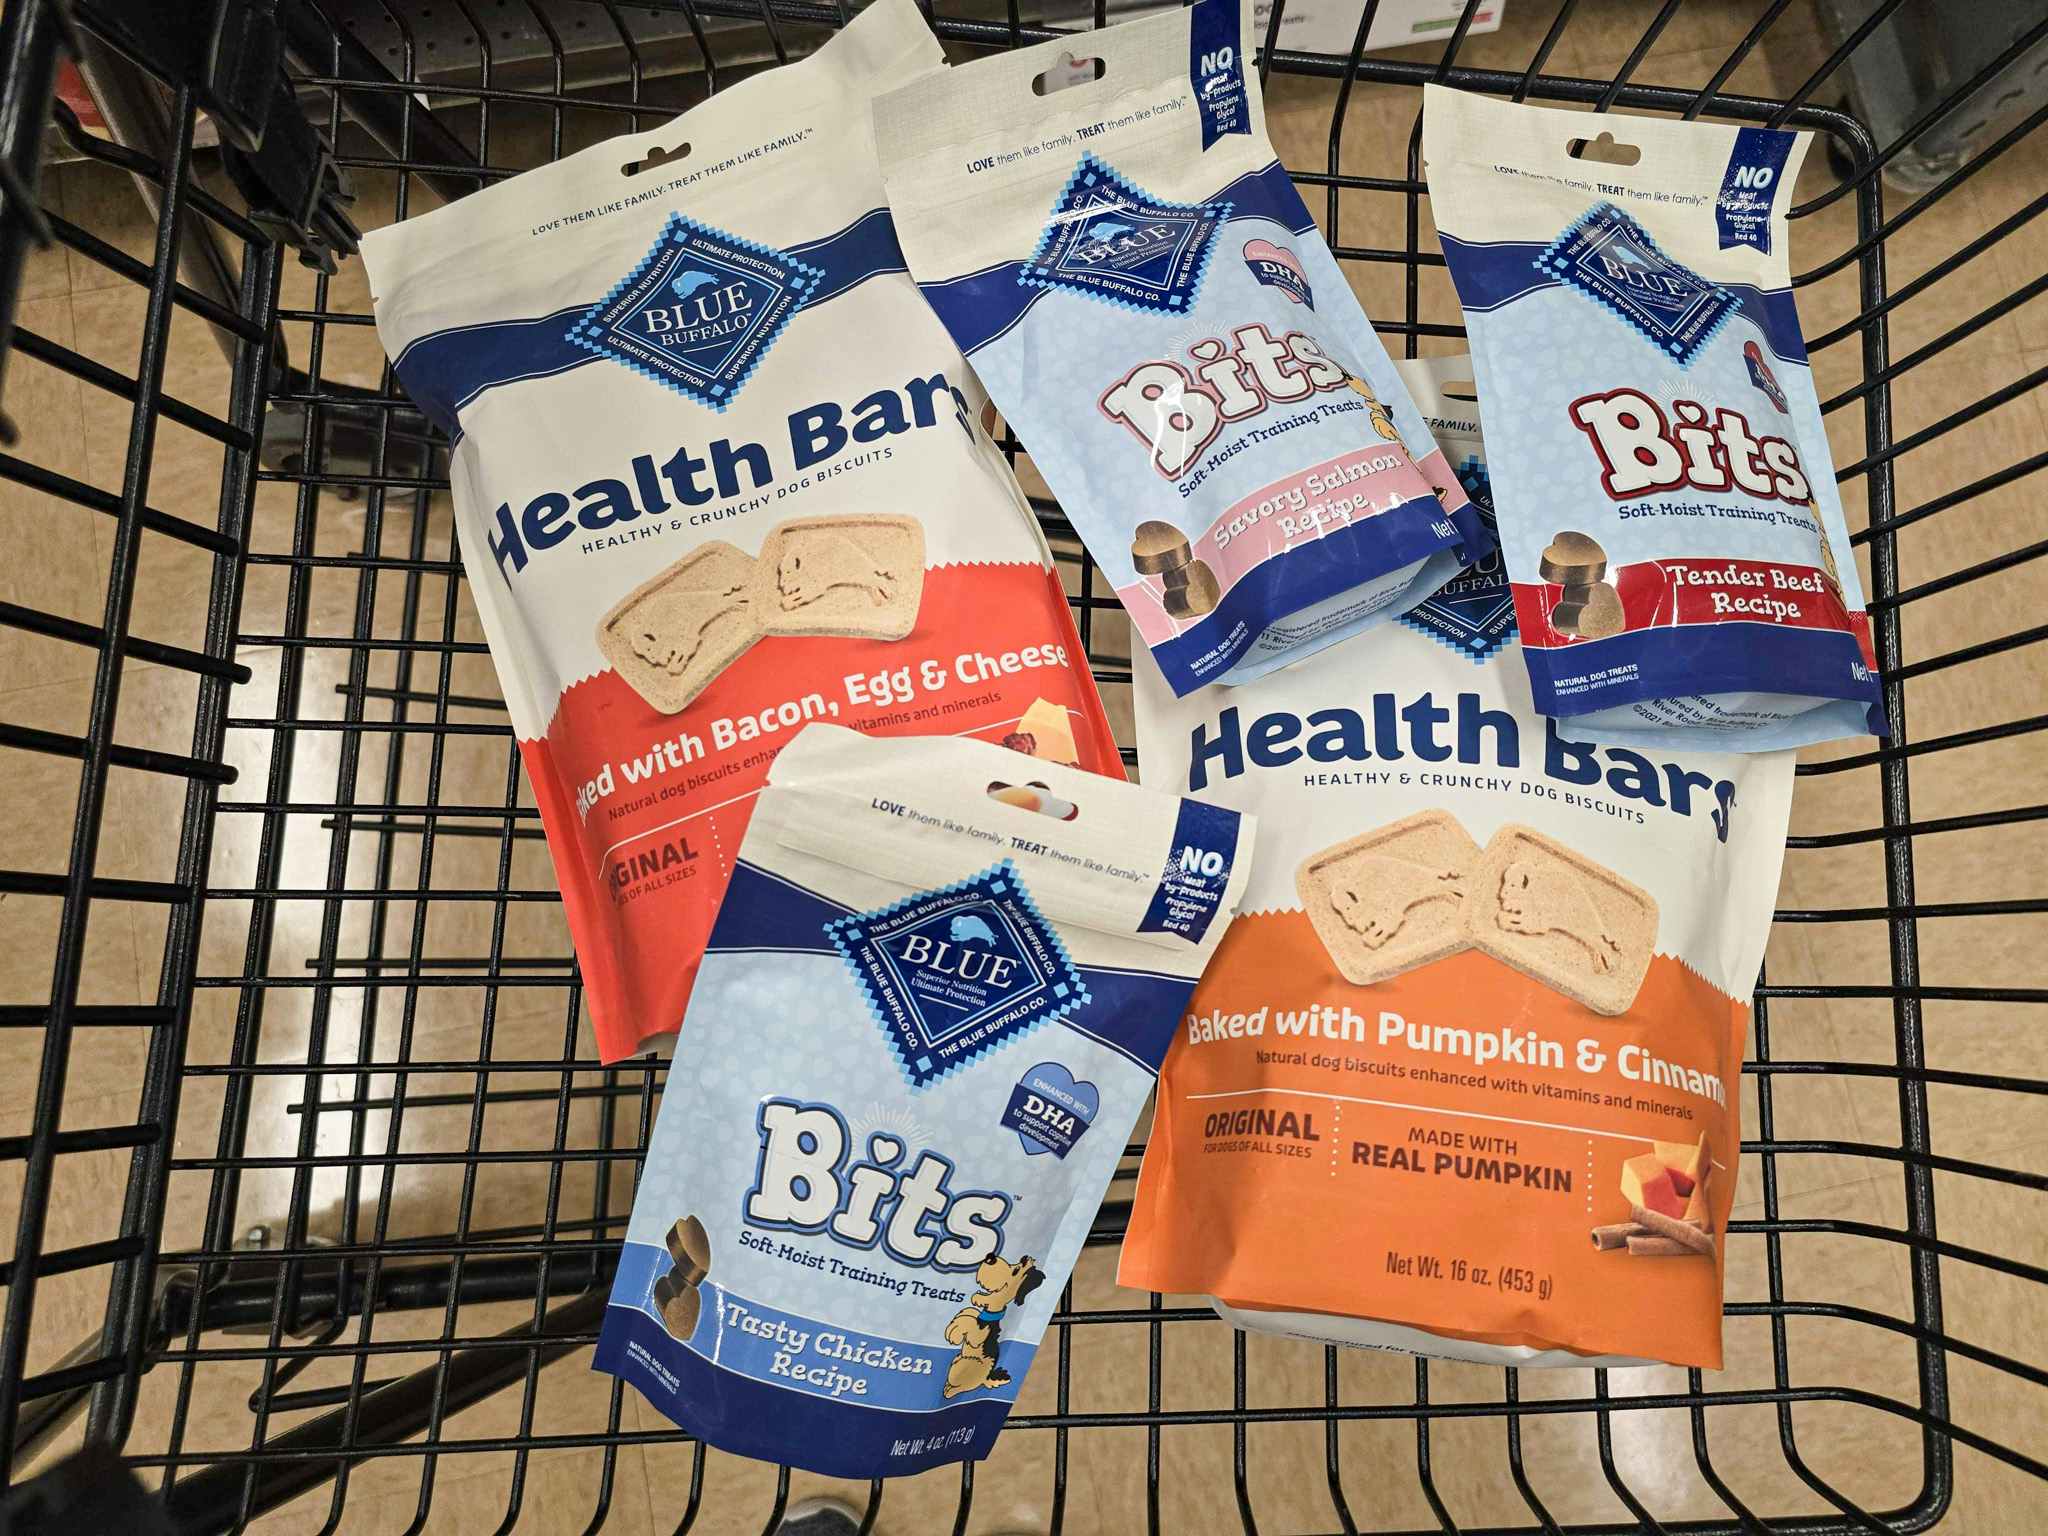 5 bags of blue buffalo dog treats in a cart